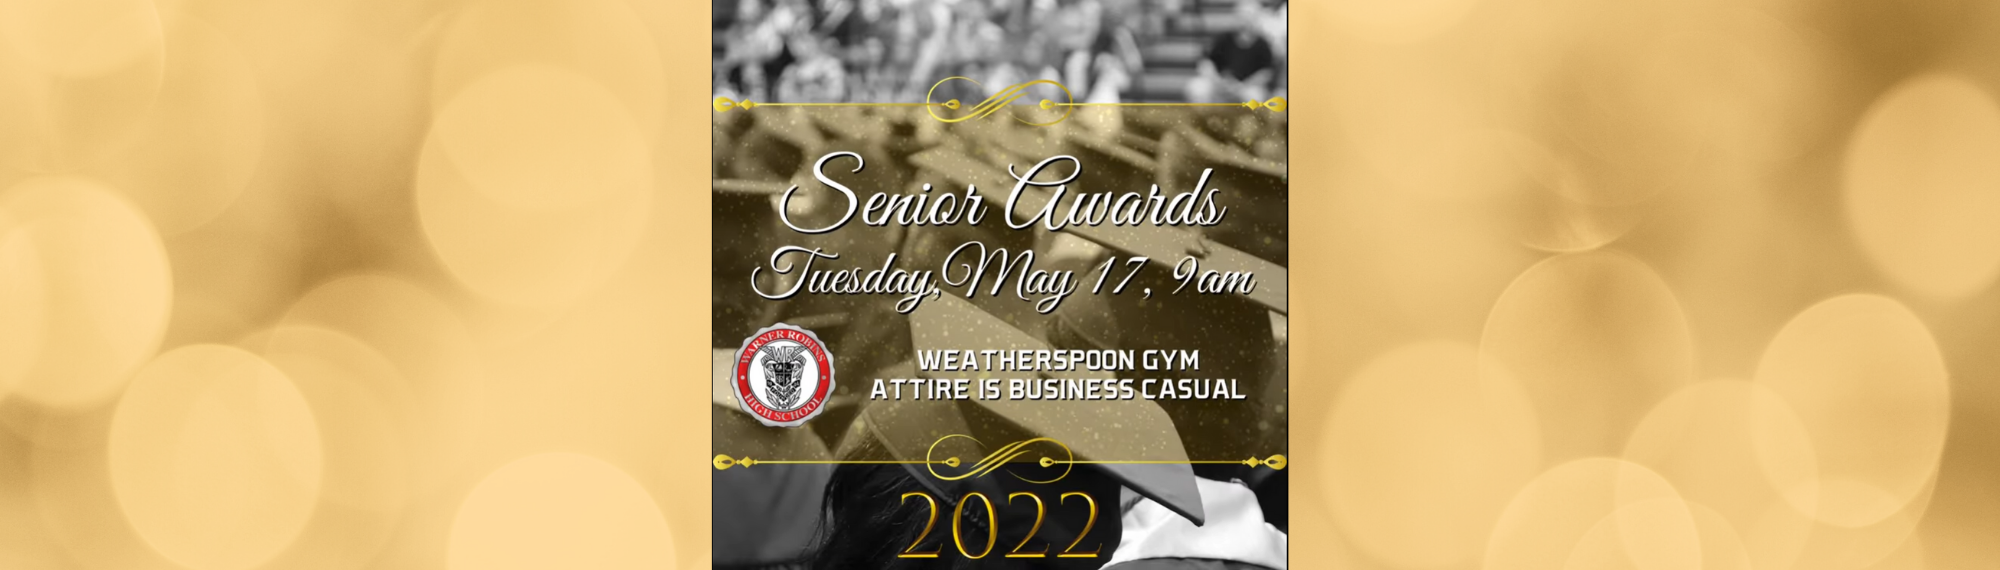 Senior Awards--22